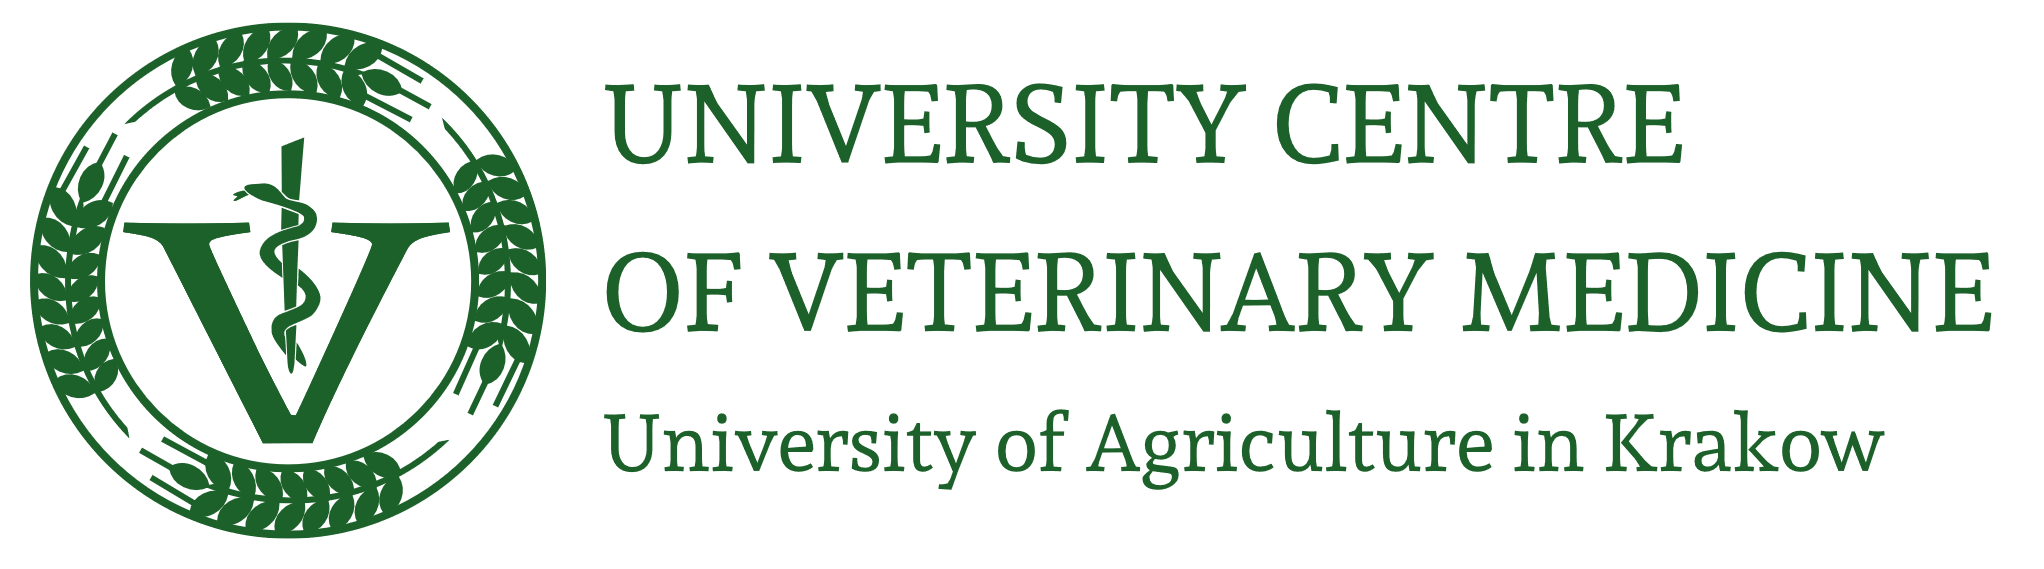 University Centre of Veterinary Medicine